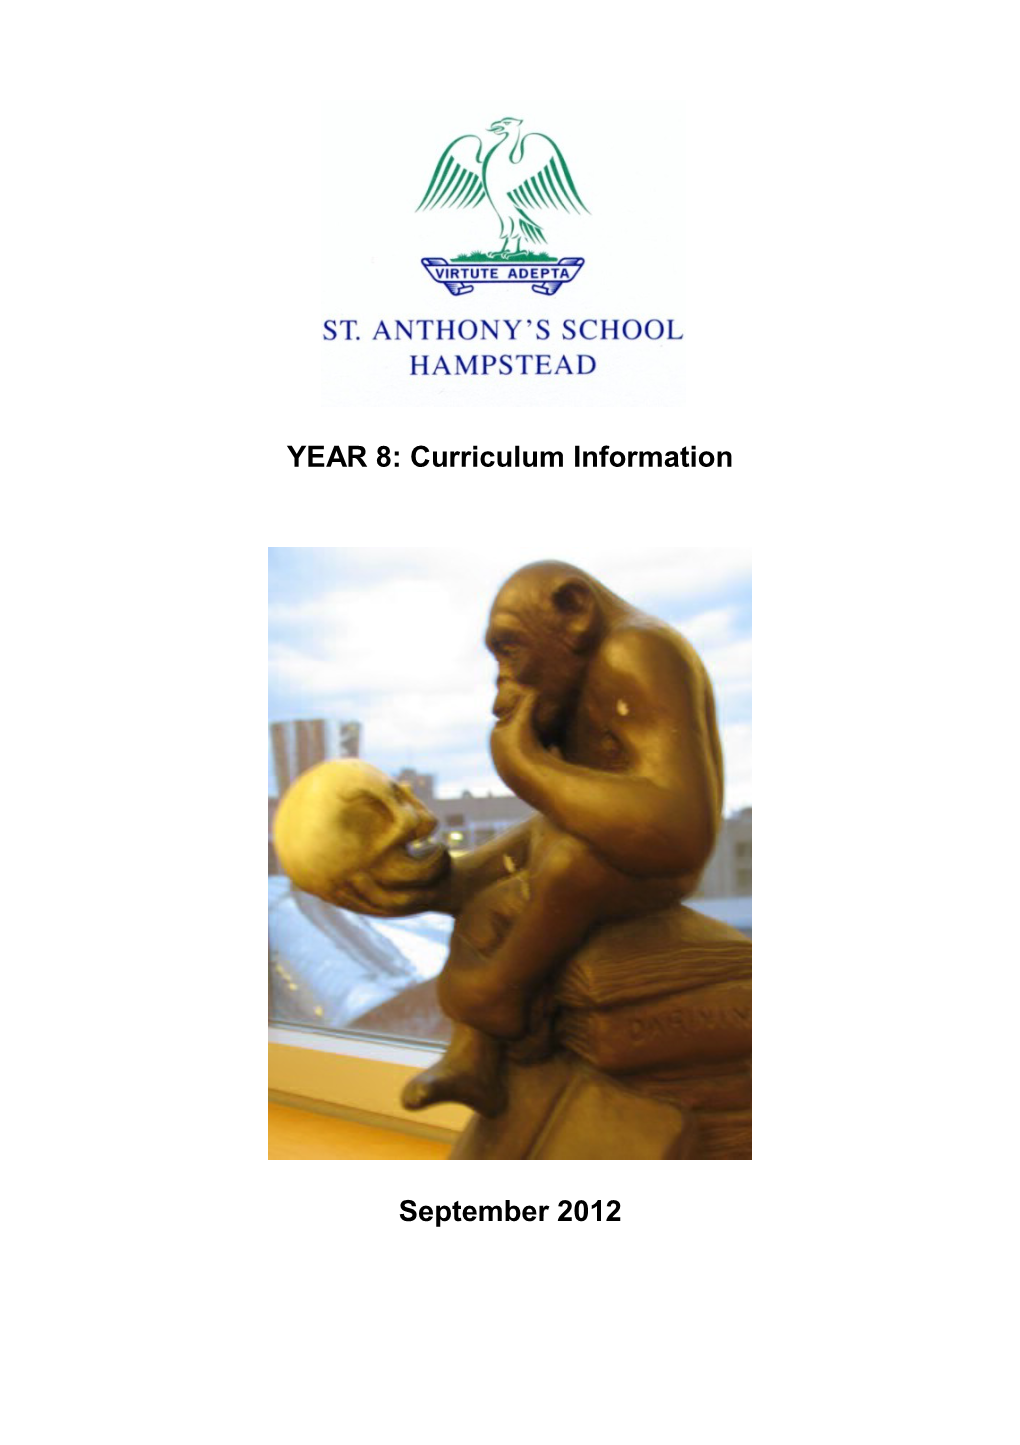 YEAR 8: Curriculum Information